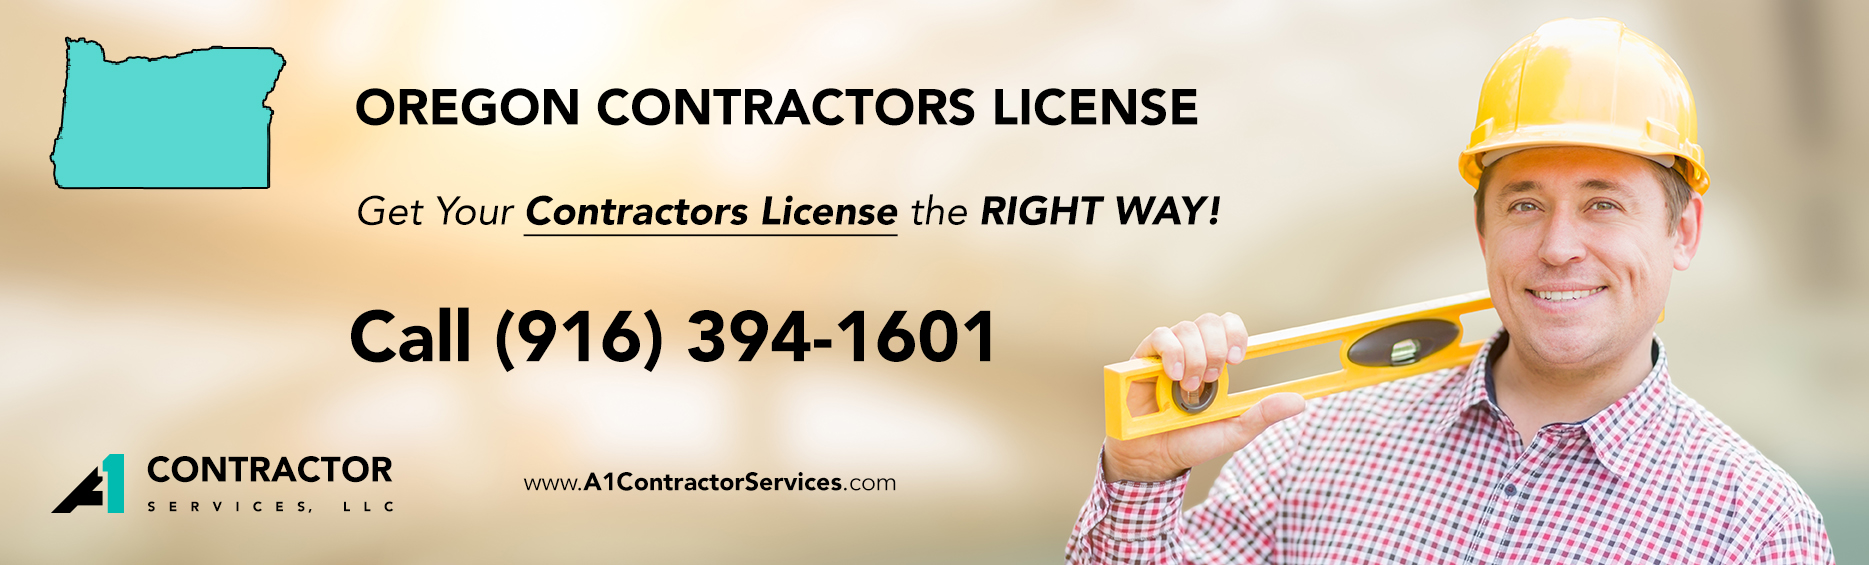 Oregon Contractors License